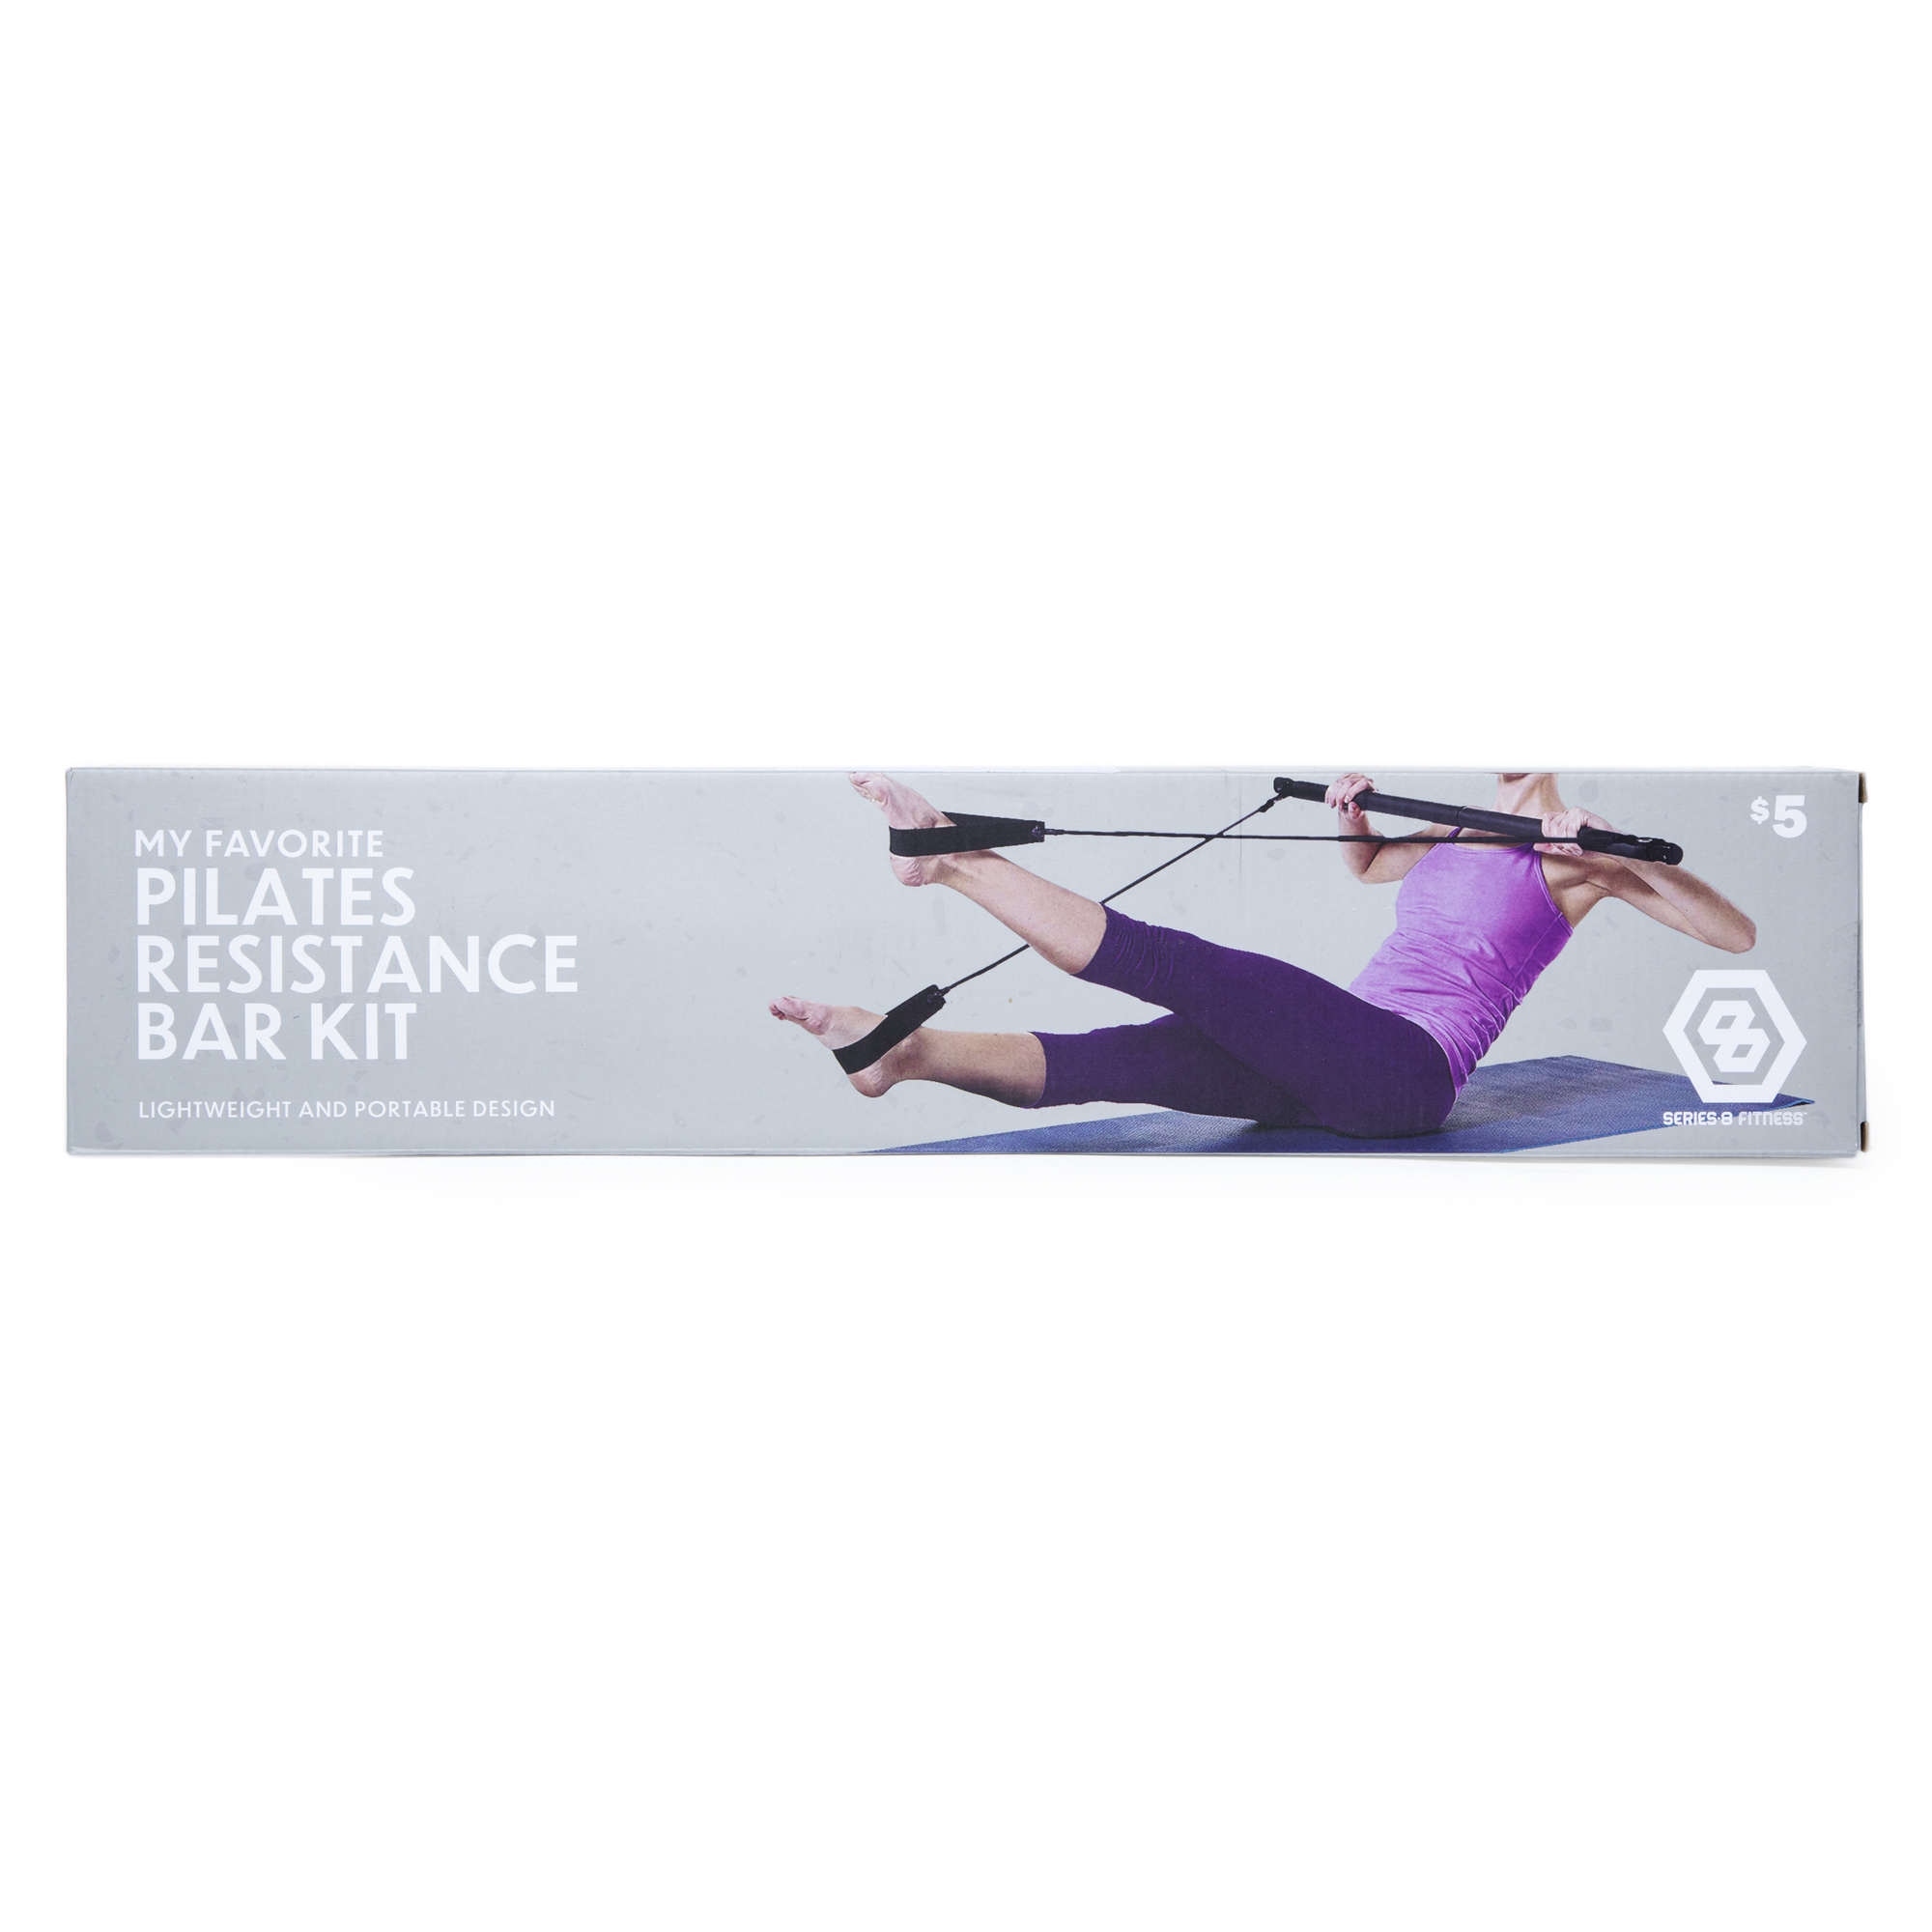 Pilates Machine Exercise Equipment - Bed Bath & Beyond